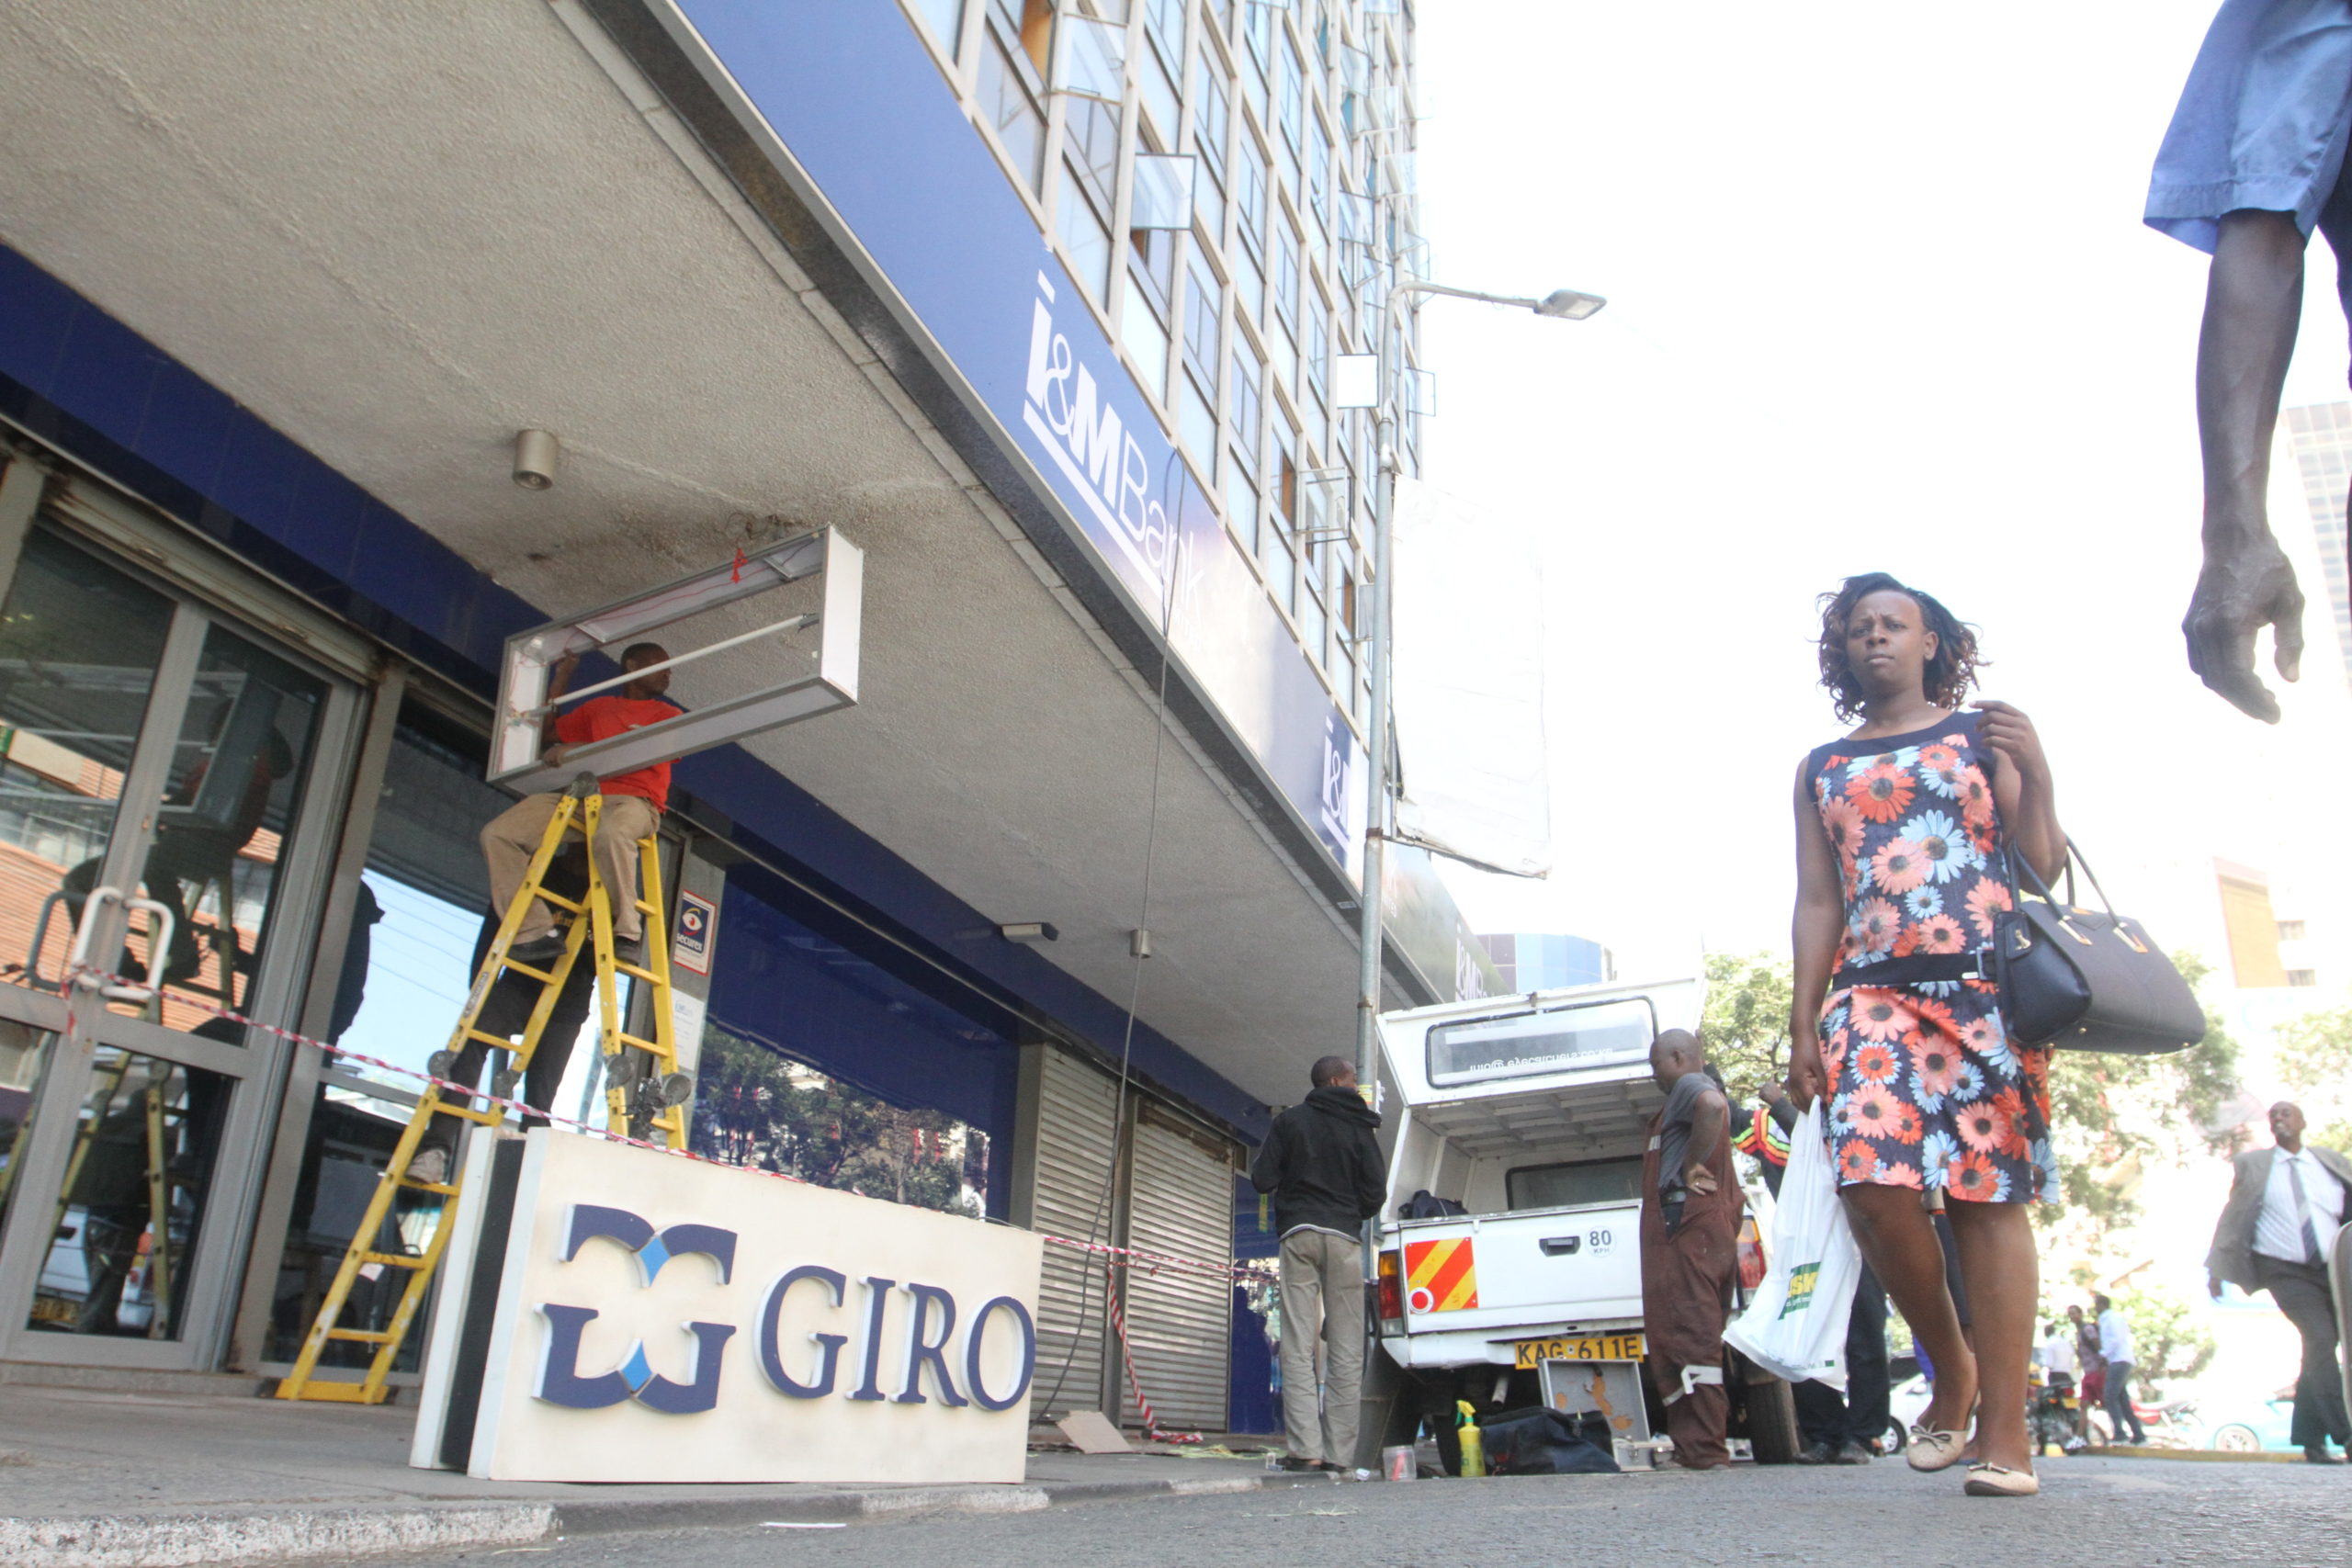 Giro Bank, Banda Branch rebranding excercise happening at Nairobi's Central Business District